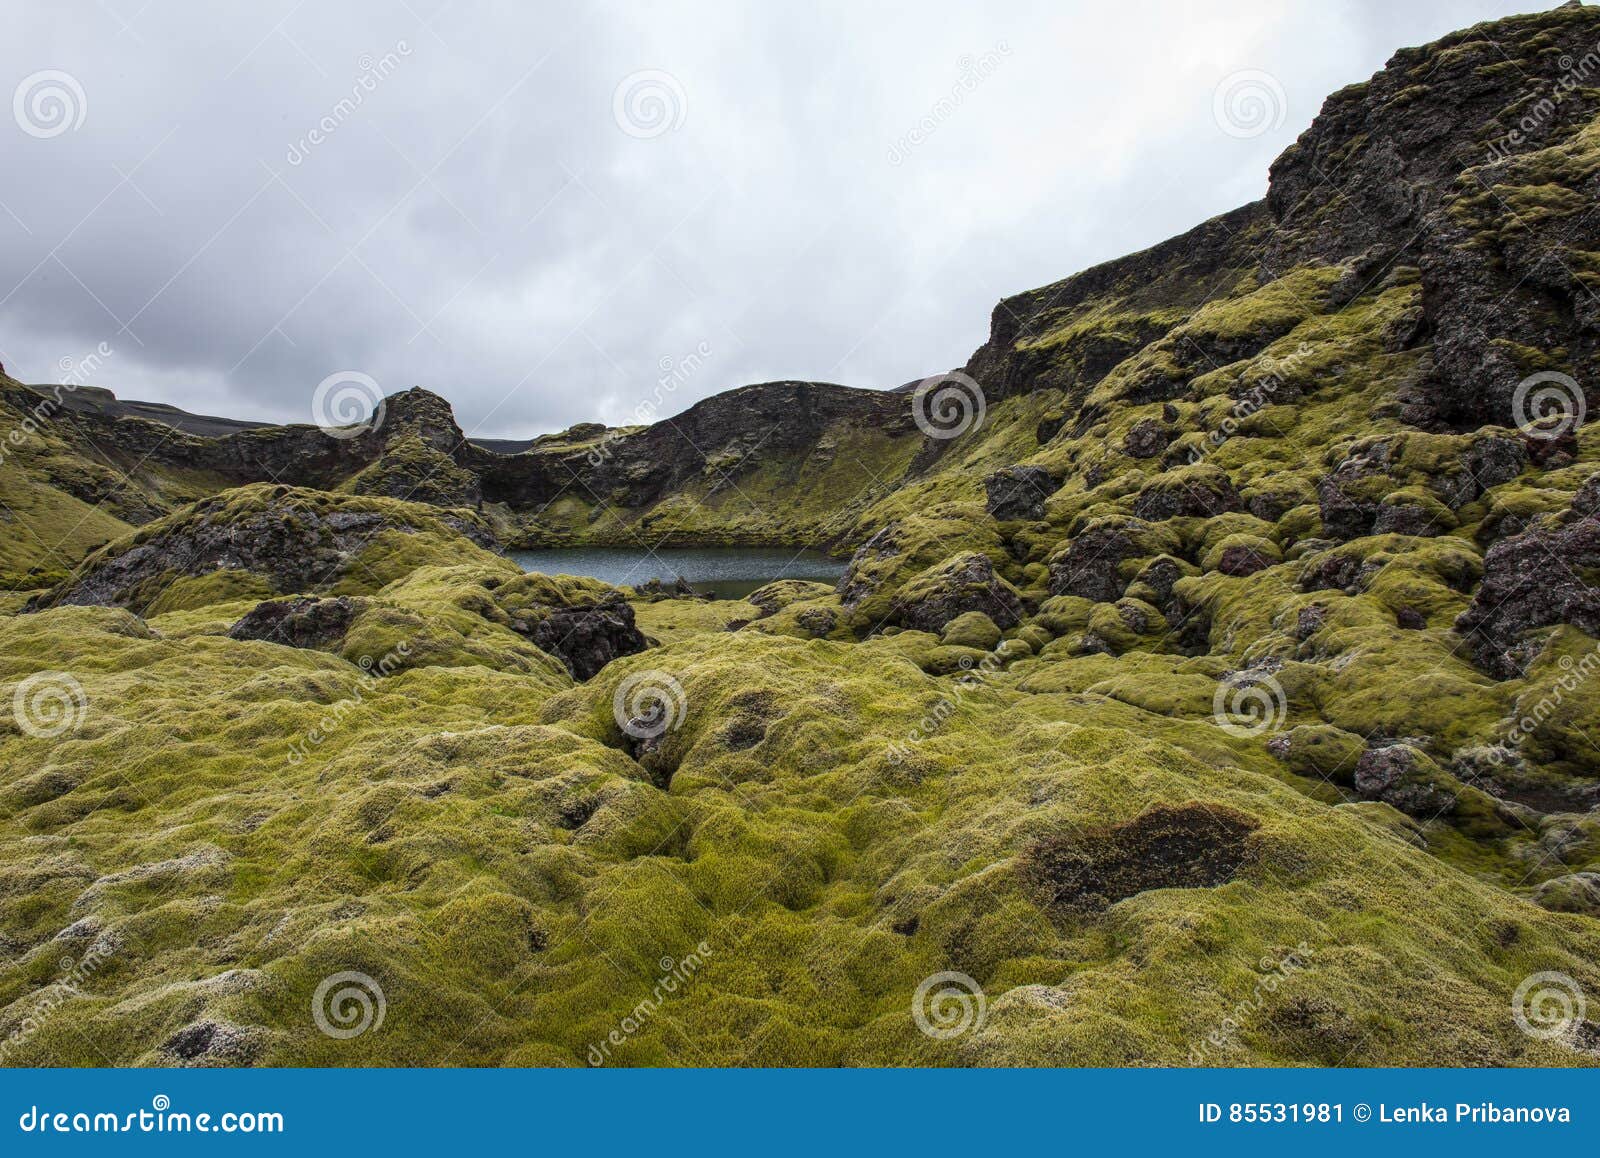  Lac  De Crat re De Laki  Islande Image stock Image du 